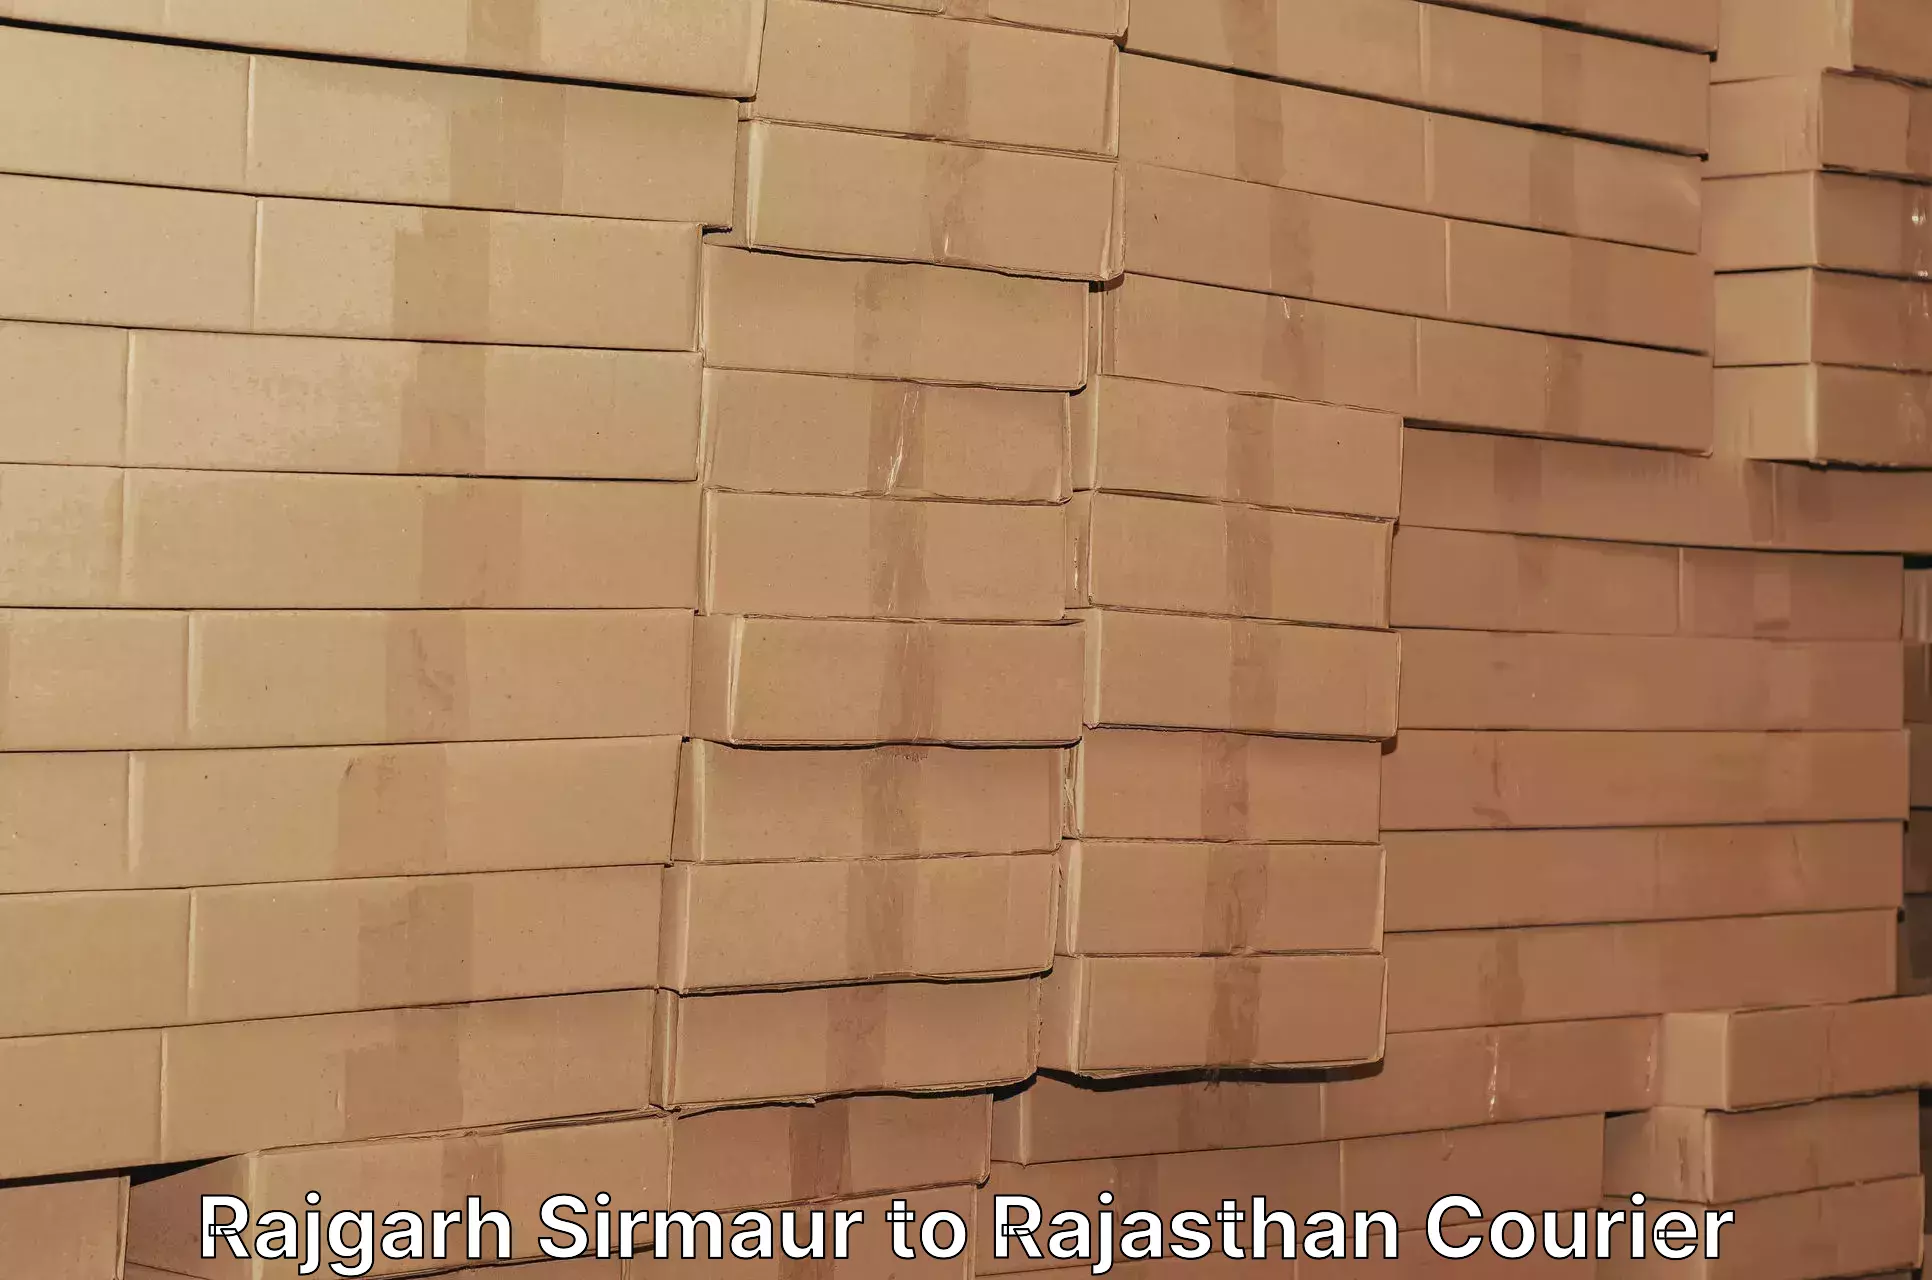 Small business couriers Rajgarh Sirmaur to Rajgarh Rajasthan